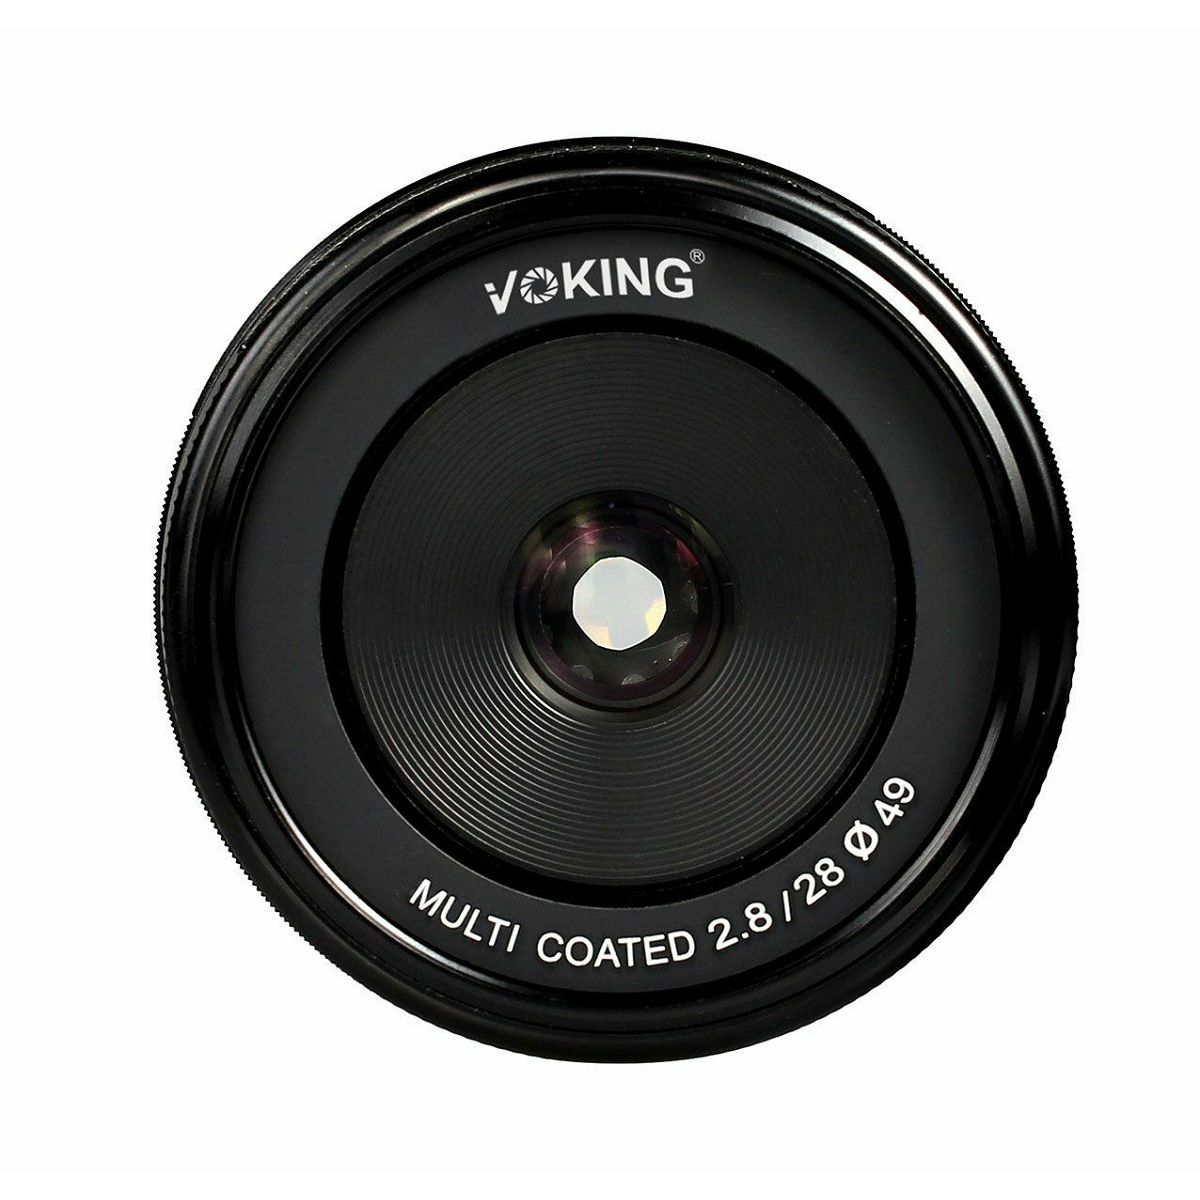 Voking 28mm F2.8 širokokutni objektiv za Fujifilm X-mount (VK28-2.8-F)